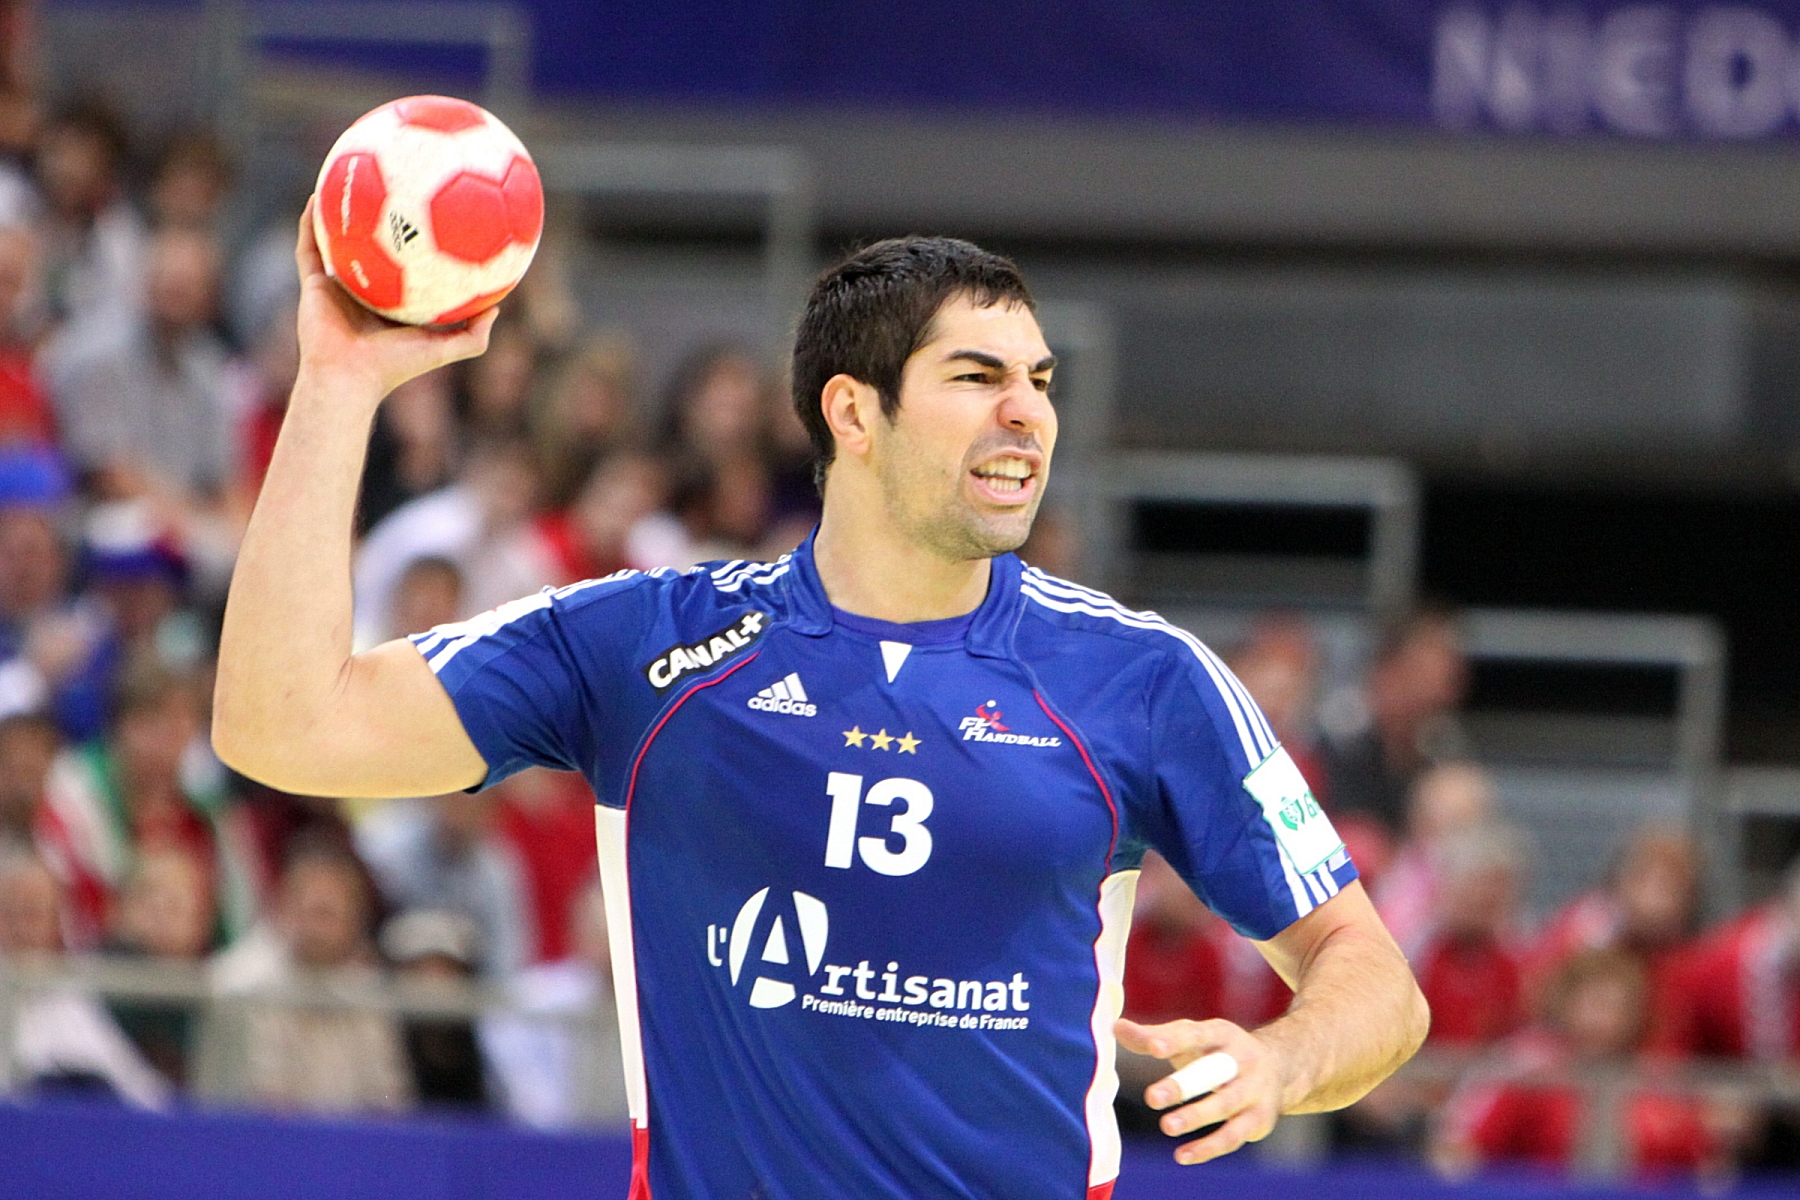 Ciencias Sociales Estadístico Colibrí File:Nikola Karabatić (Montpellier HB) - Handball player of France (2).jpg  - Wikimedia Commons